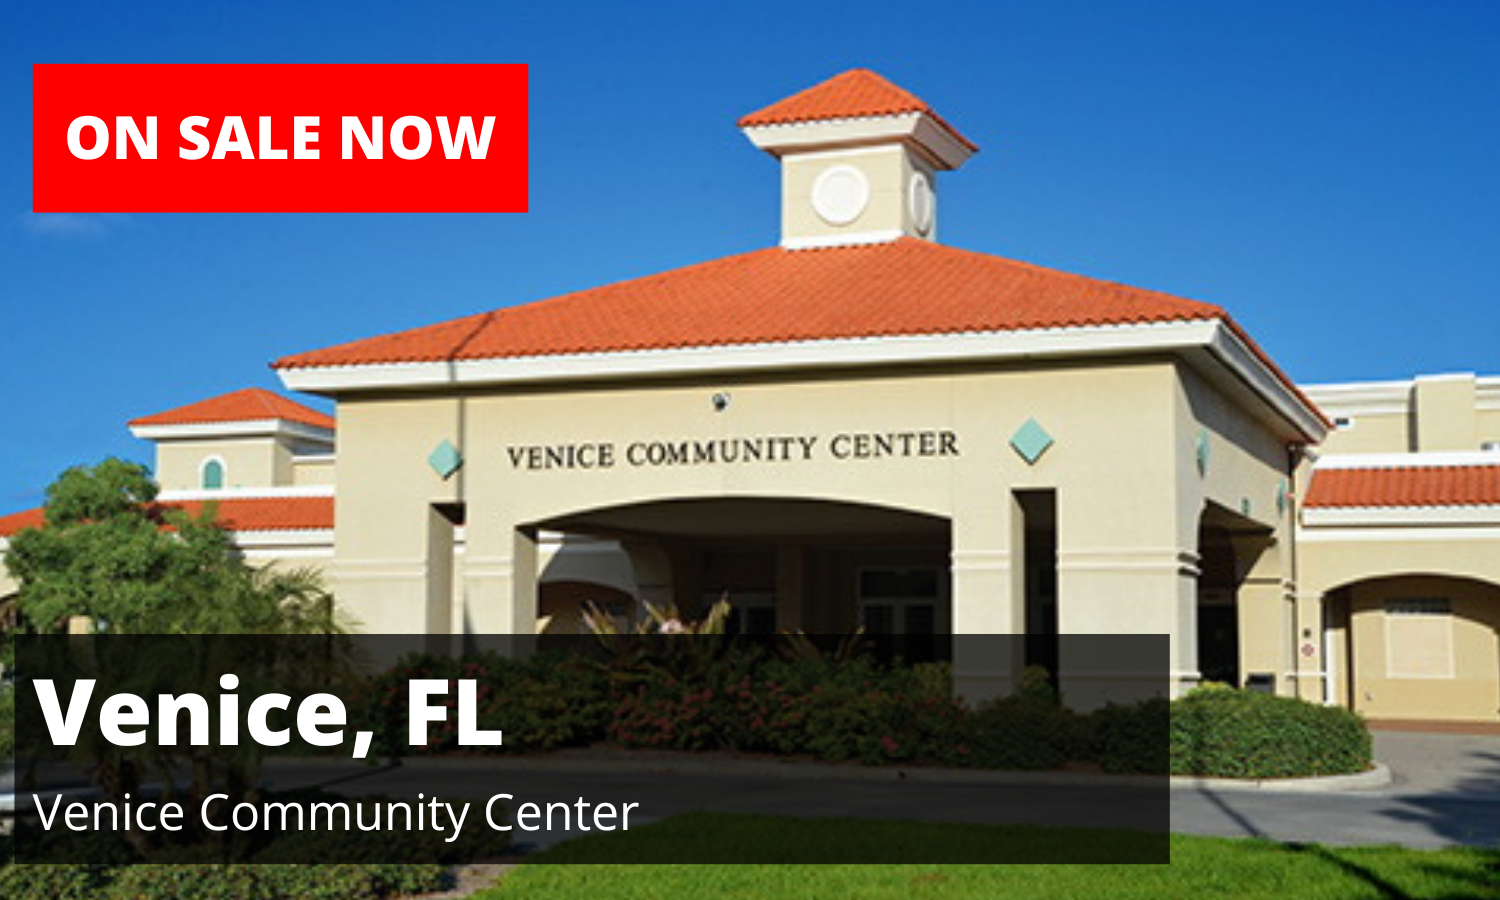 Venice Community Center Venice FL Season Tickets ON SALE NOW